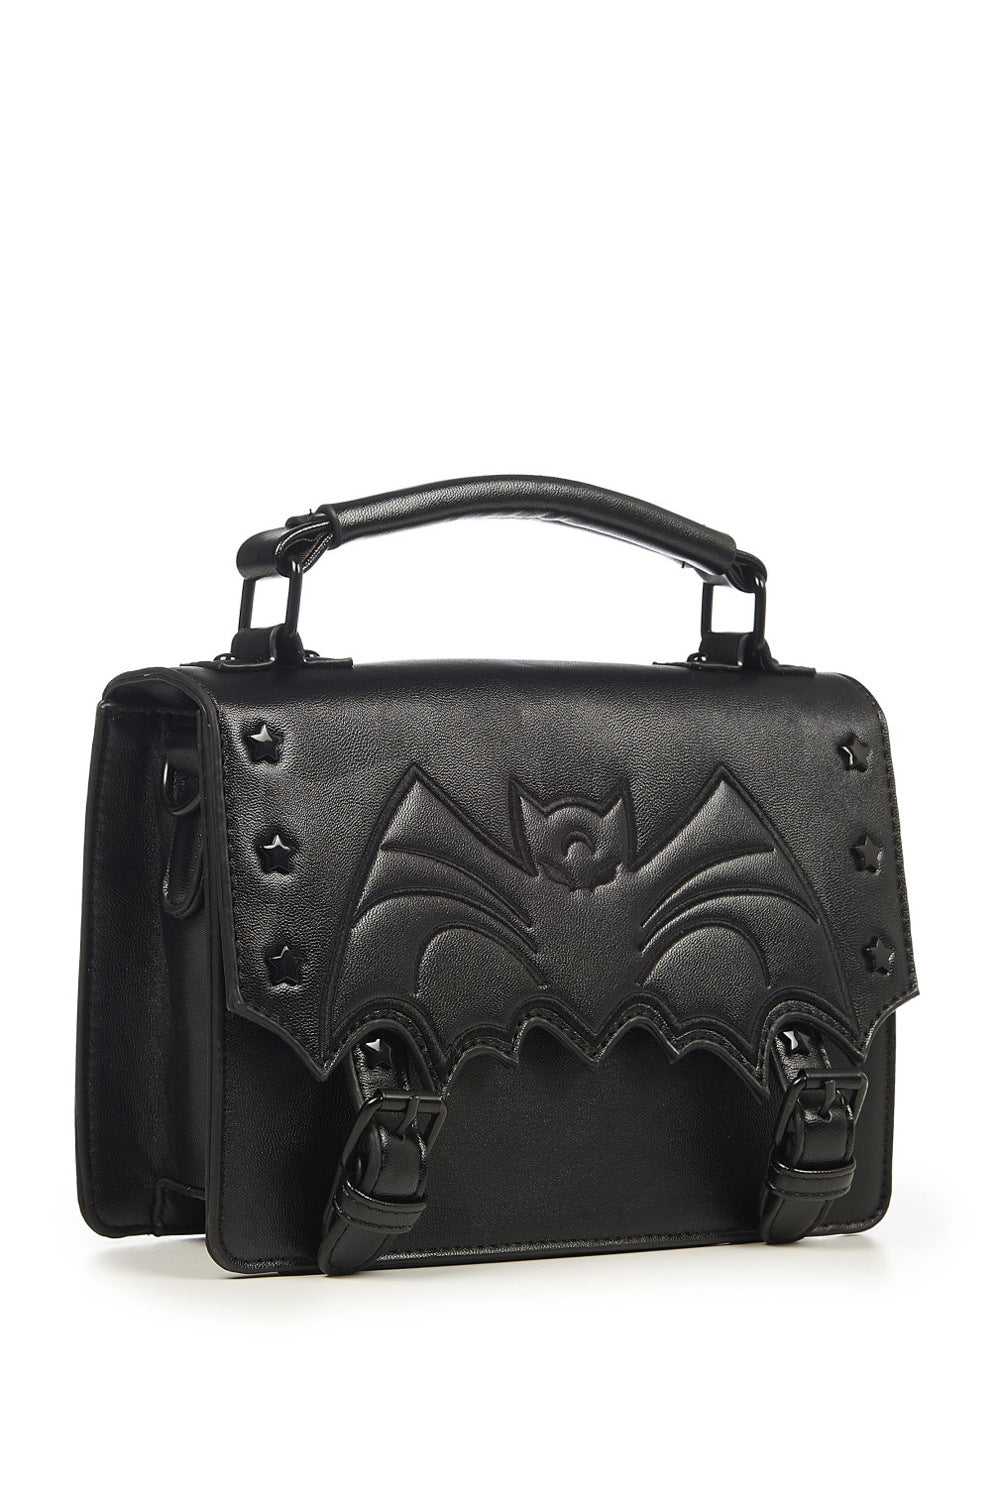 Black satchel handbag with bat emboss print